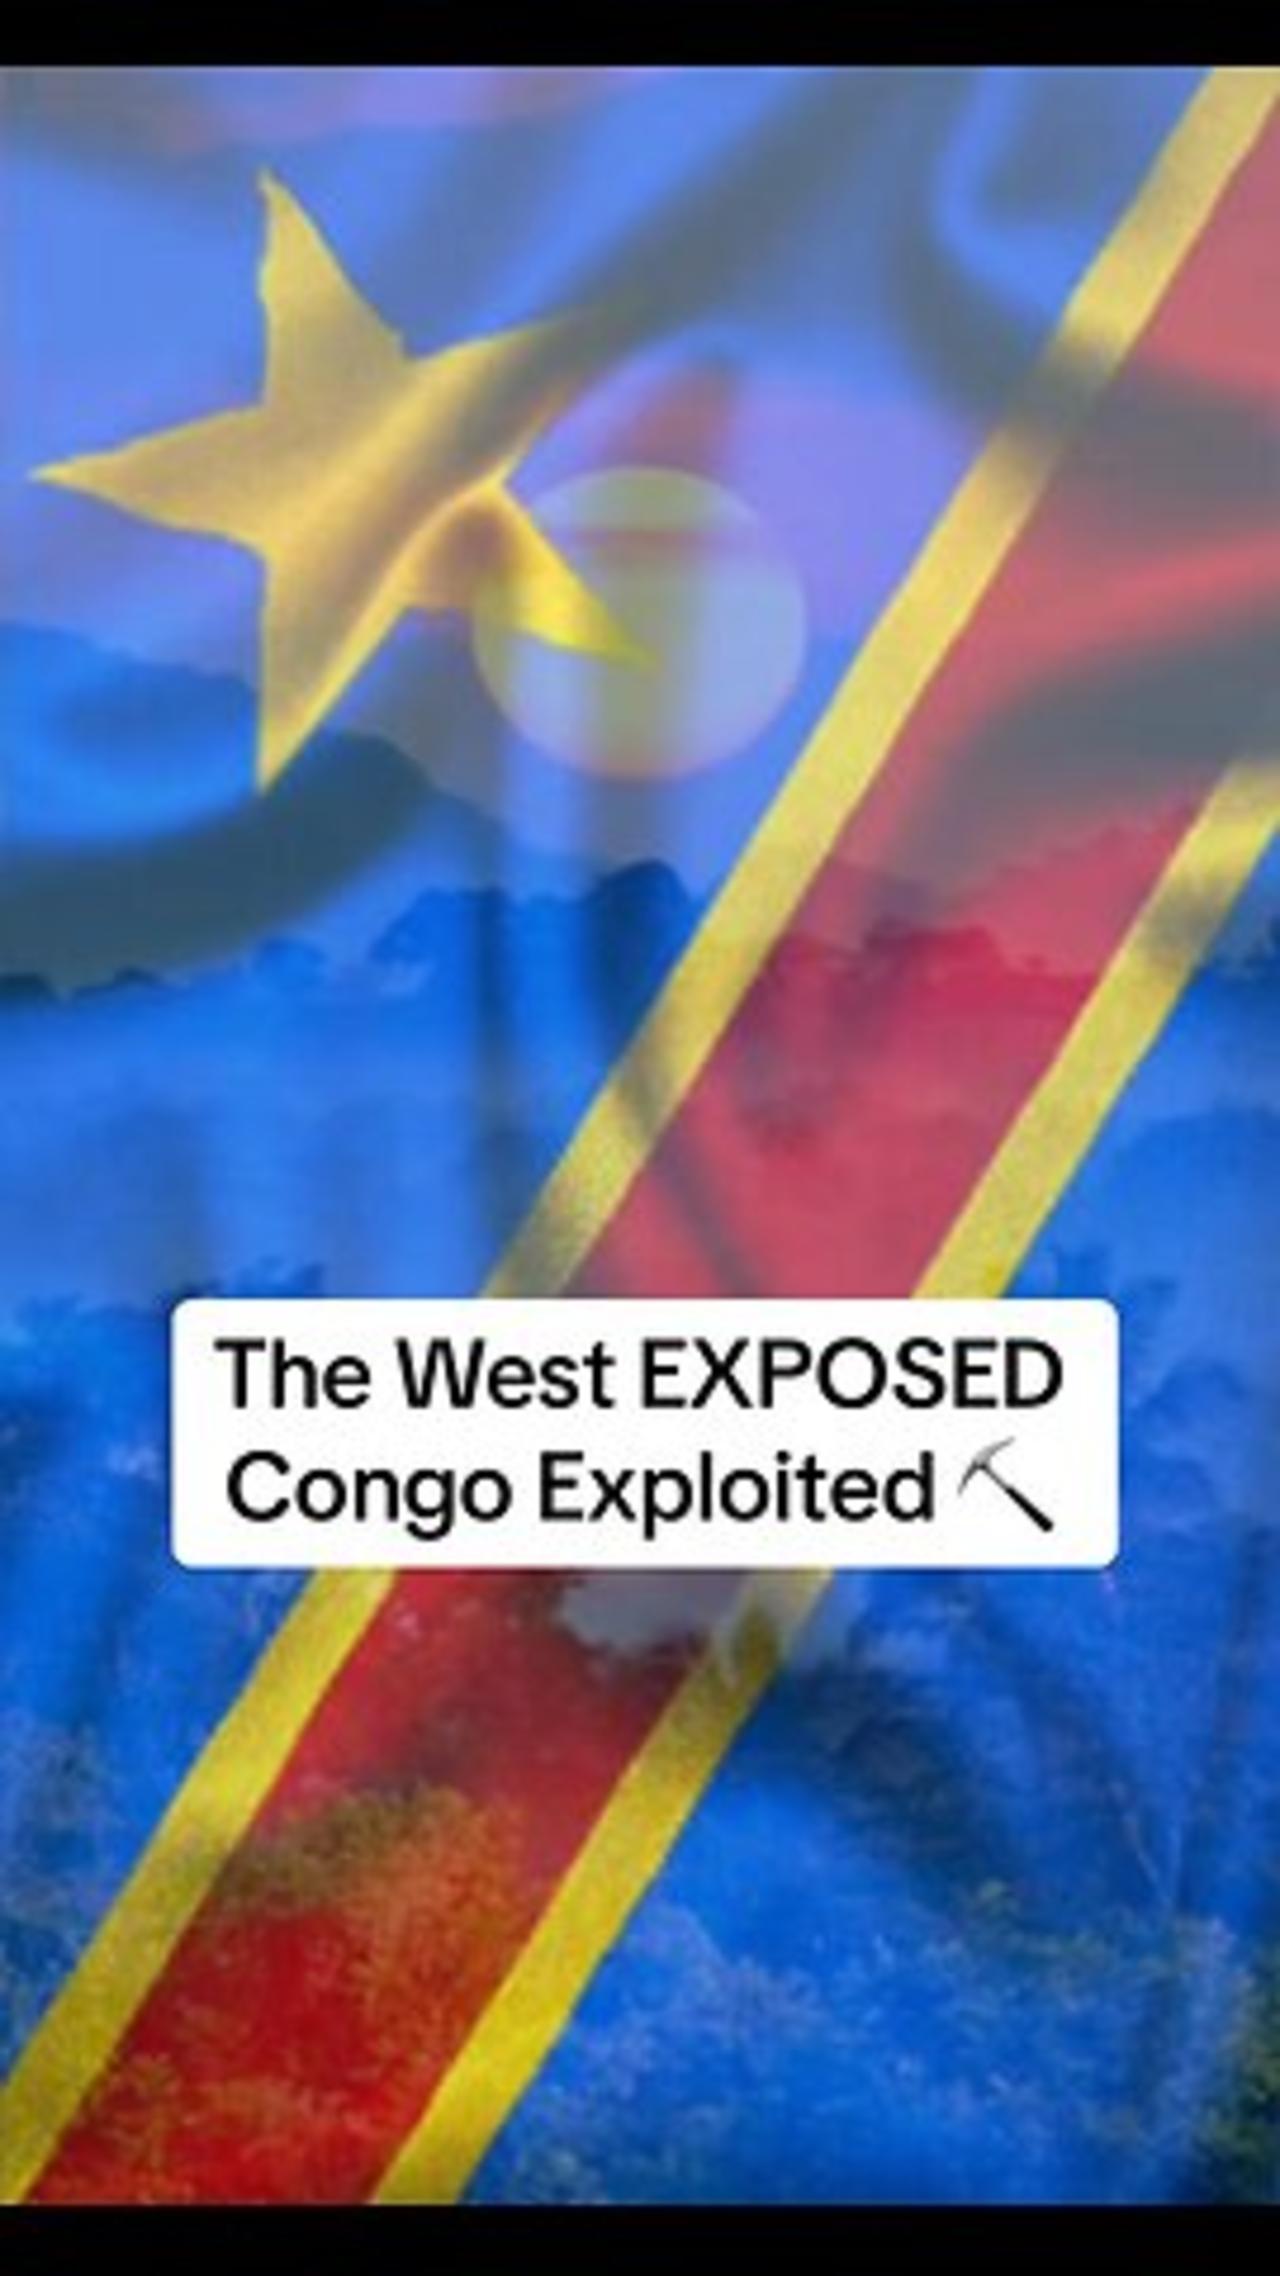 Congo EXPLOITED Awareness Video